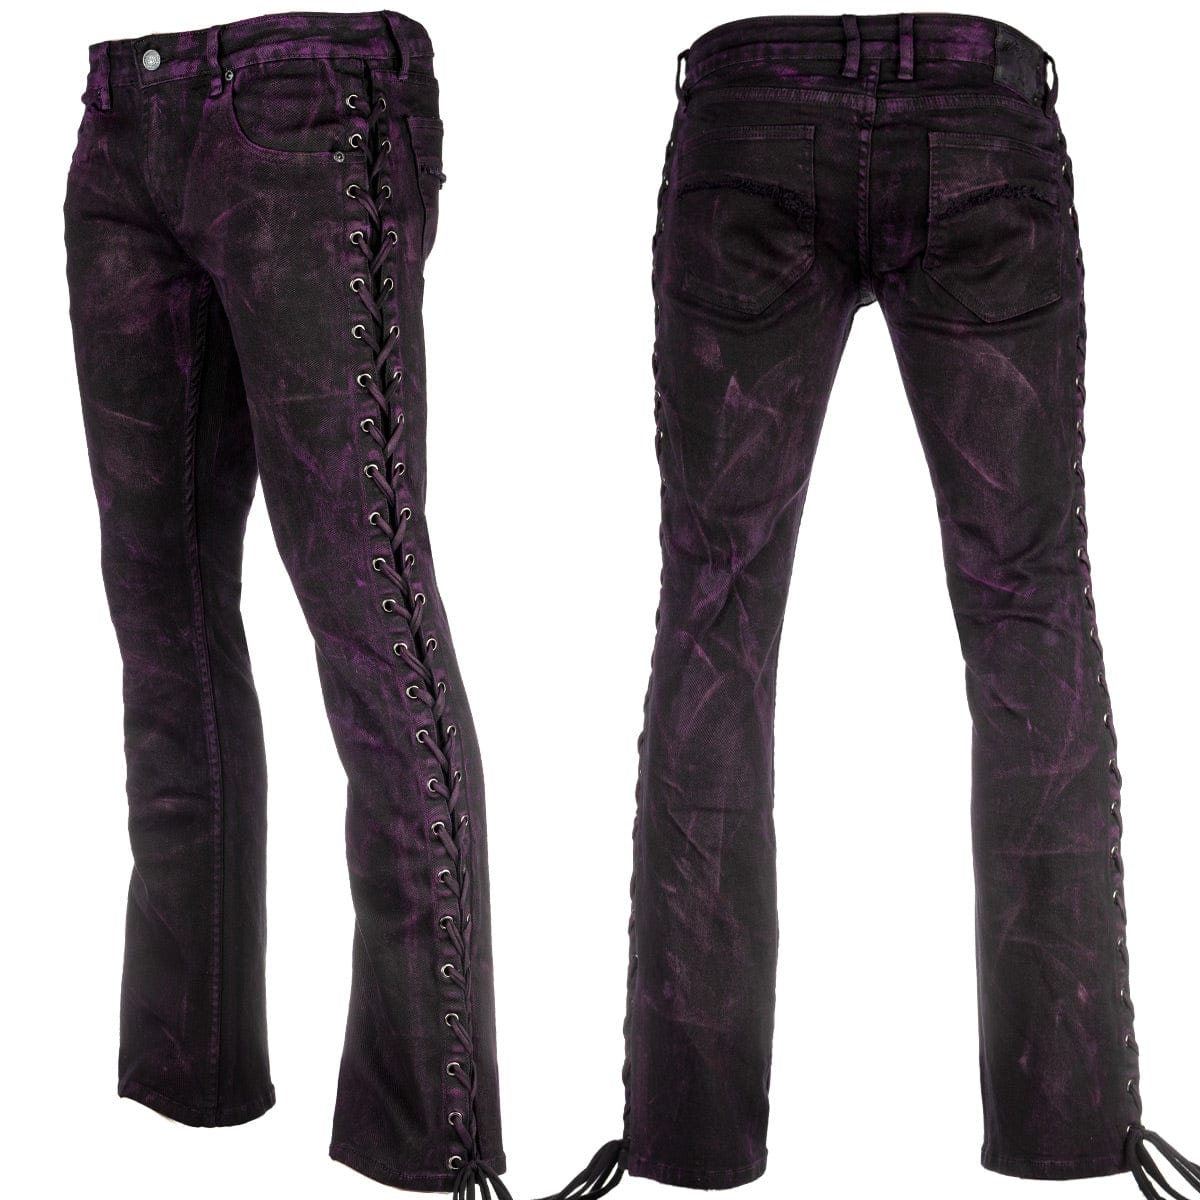 Custom Chop Shop Pants Wornstar Custom Jeans - Purple Haze Alloy Washed Side Laced